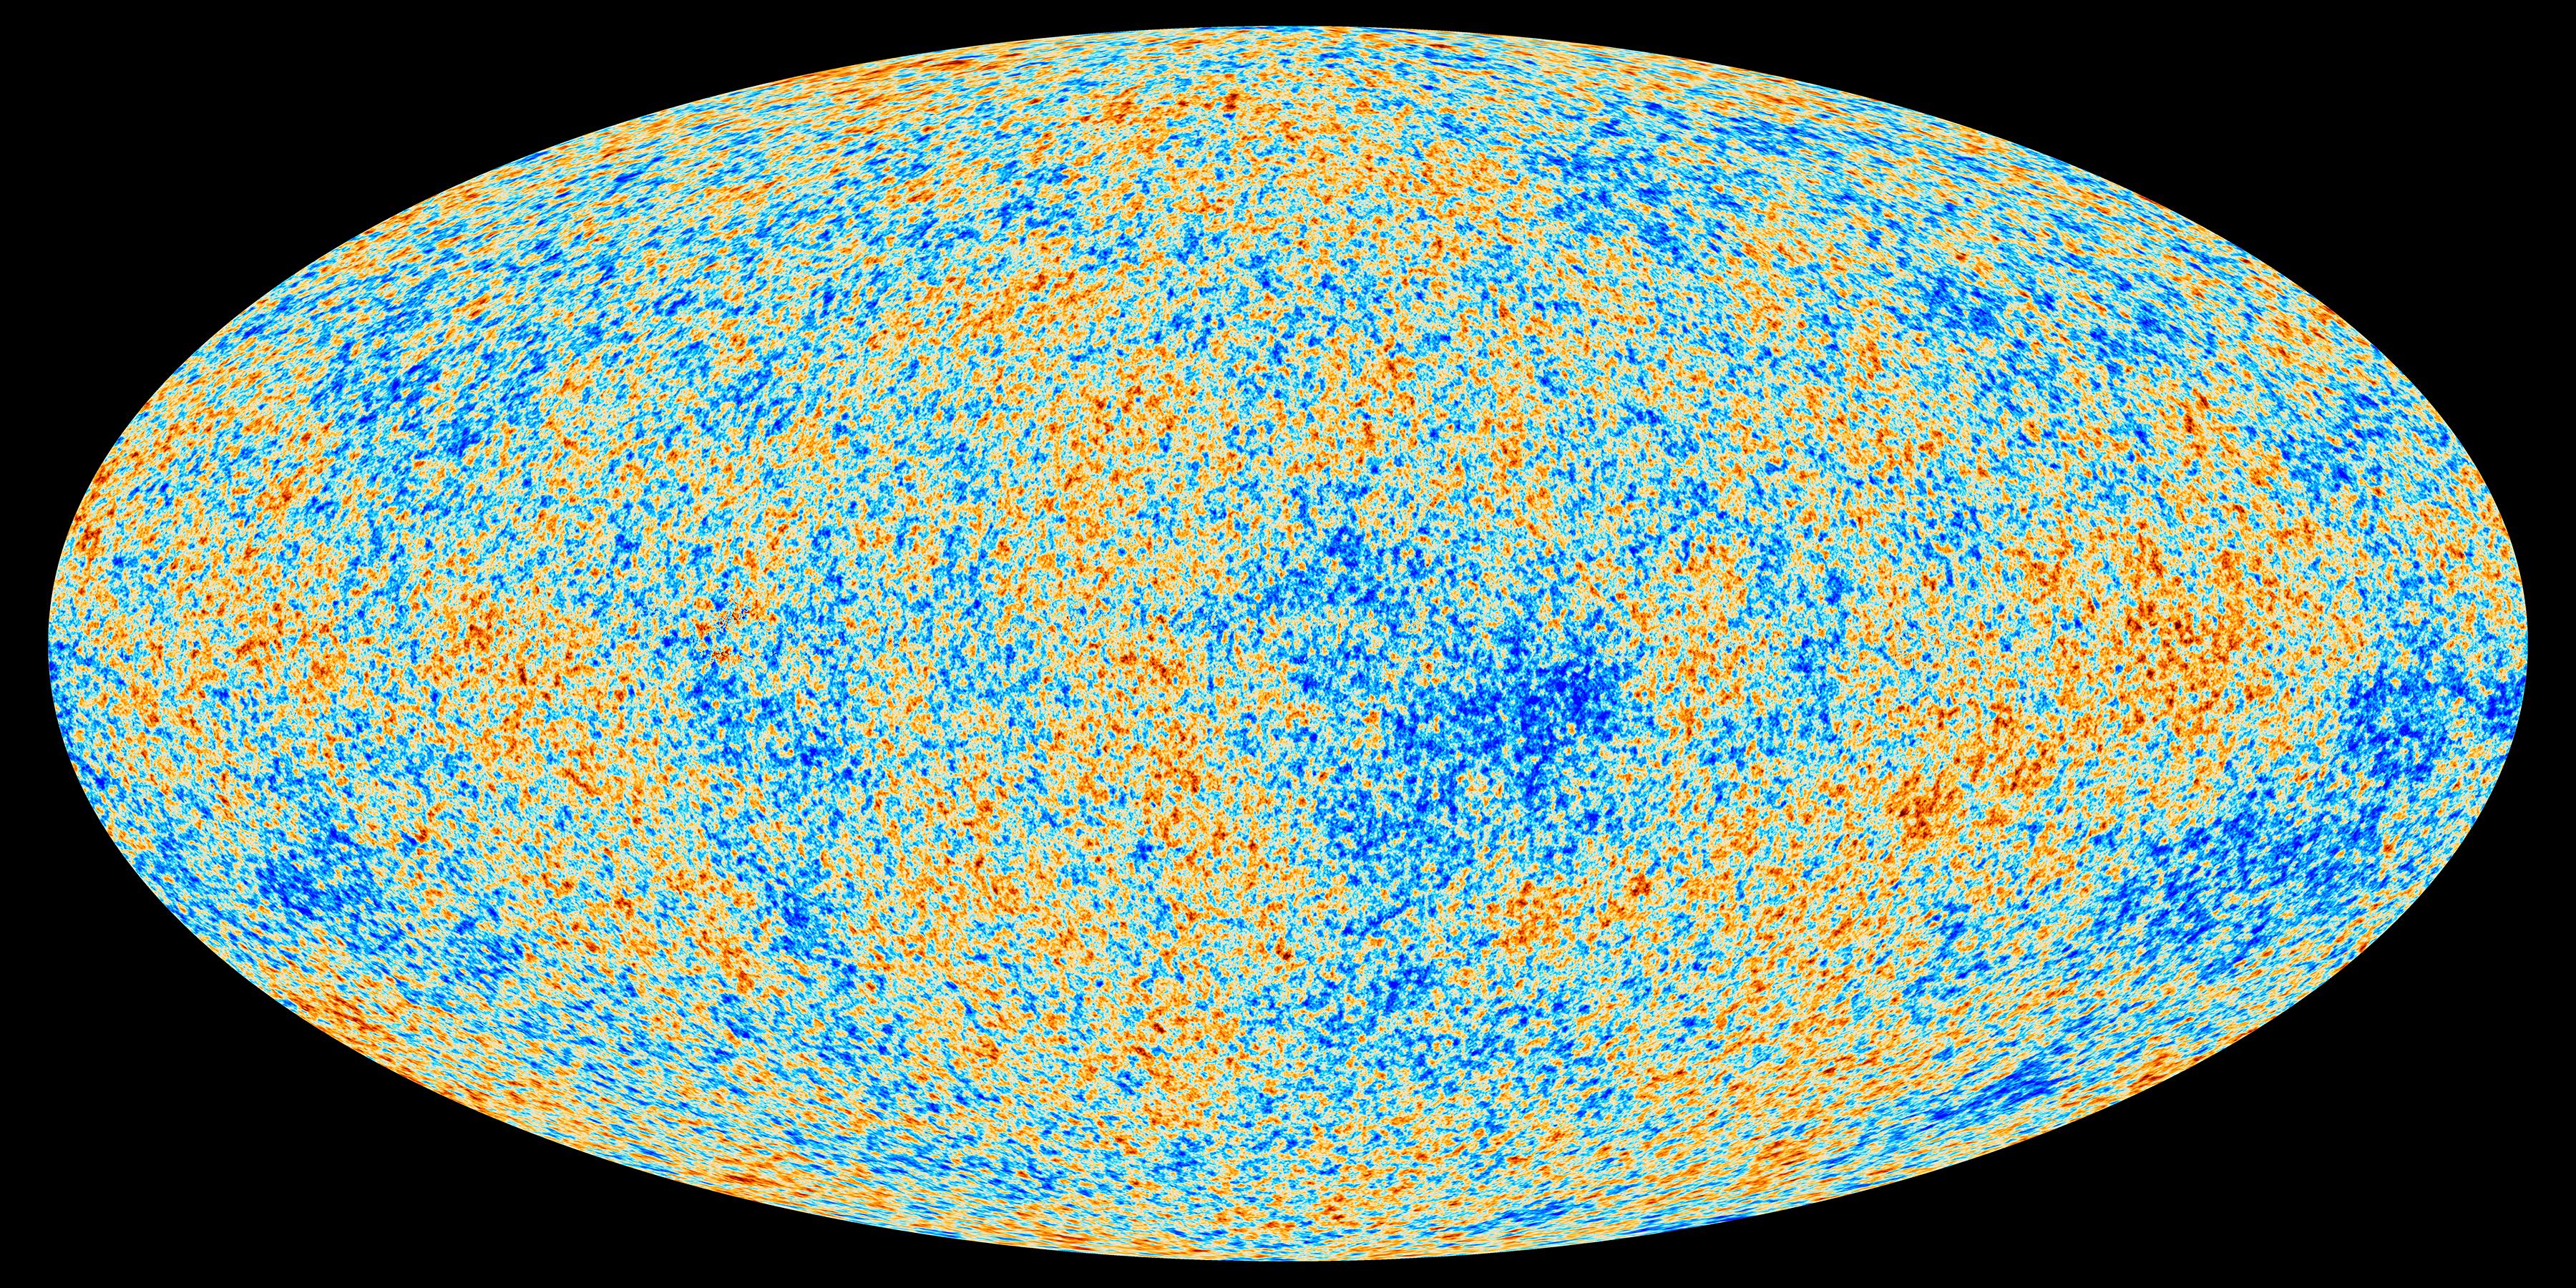 Cosmic Microwave Background, NASA image